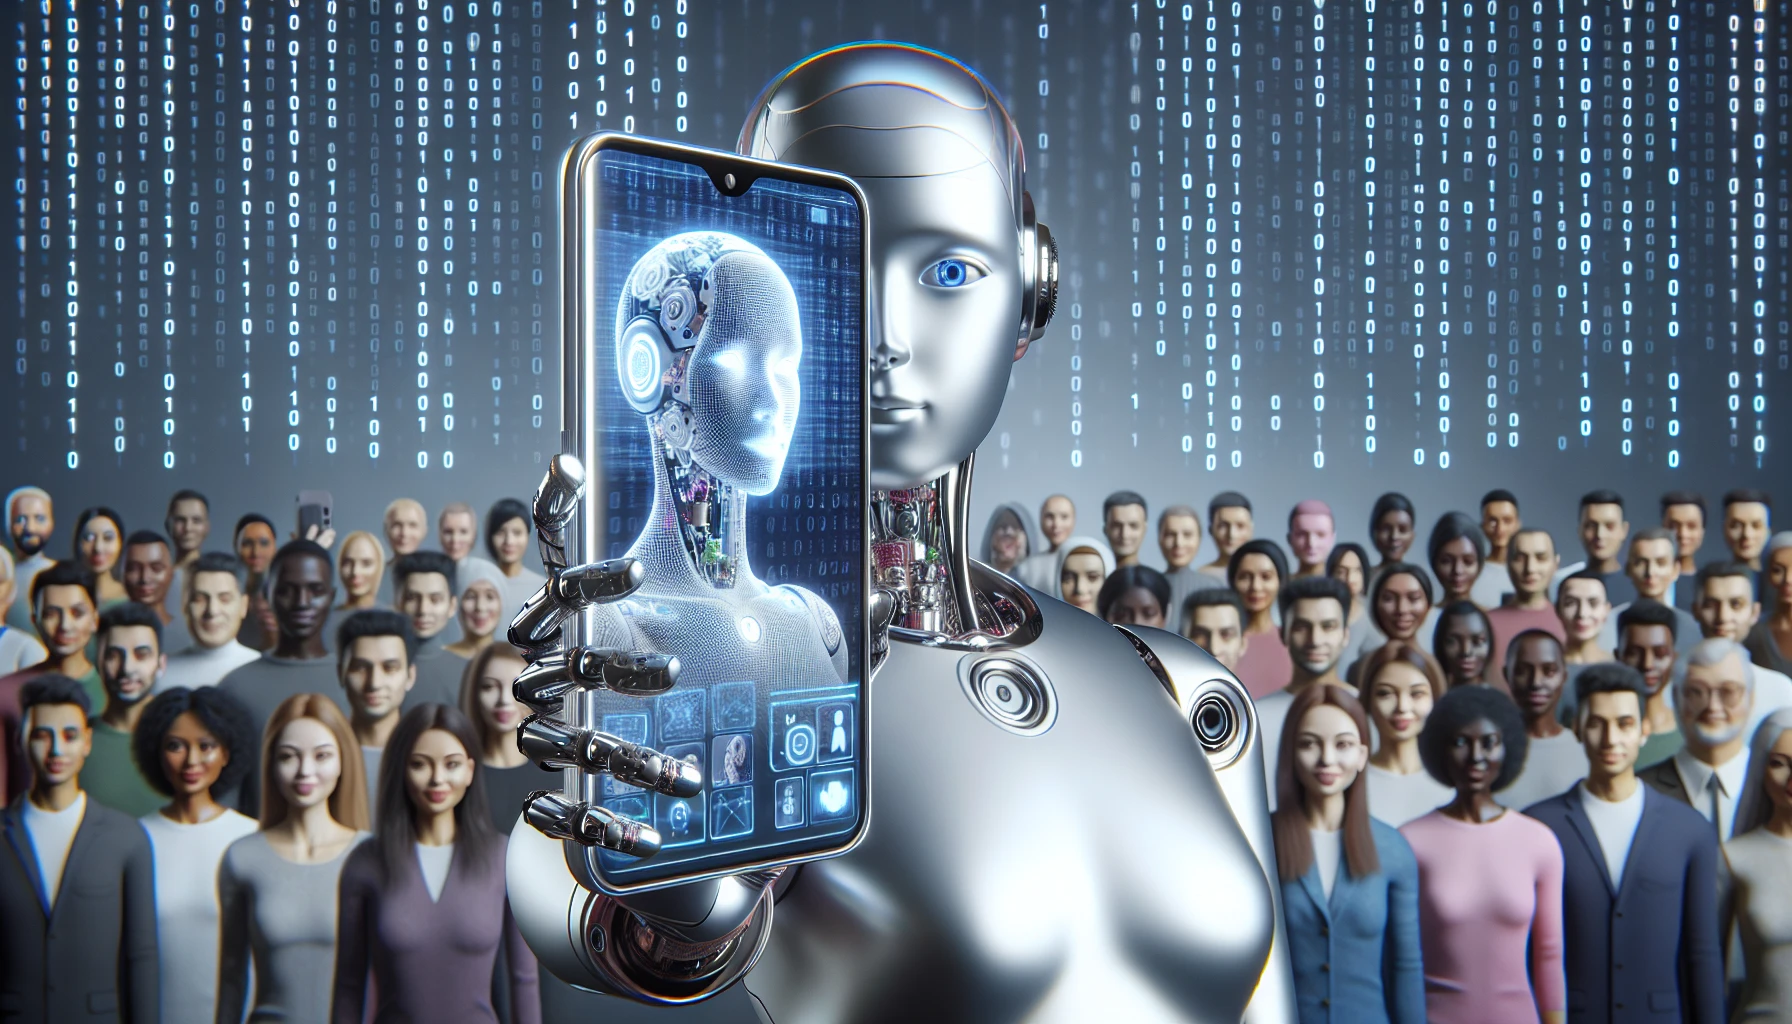 The future of AI selfie generation